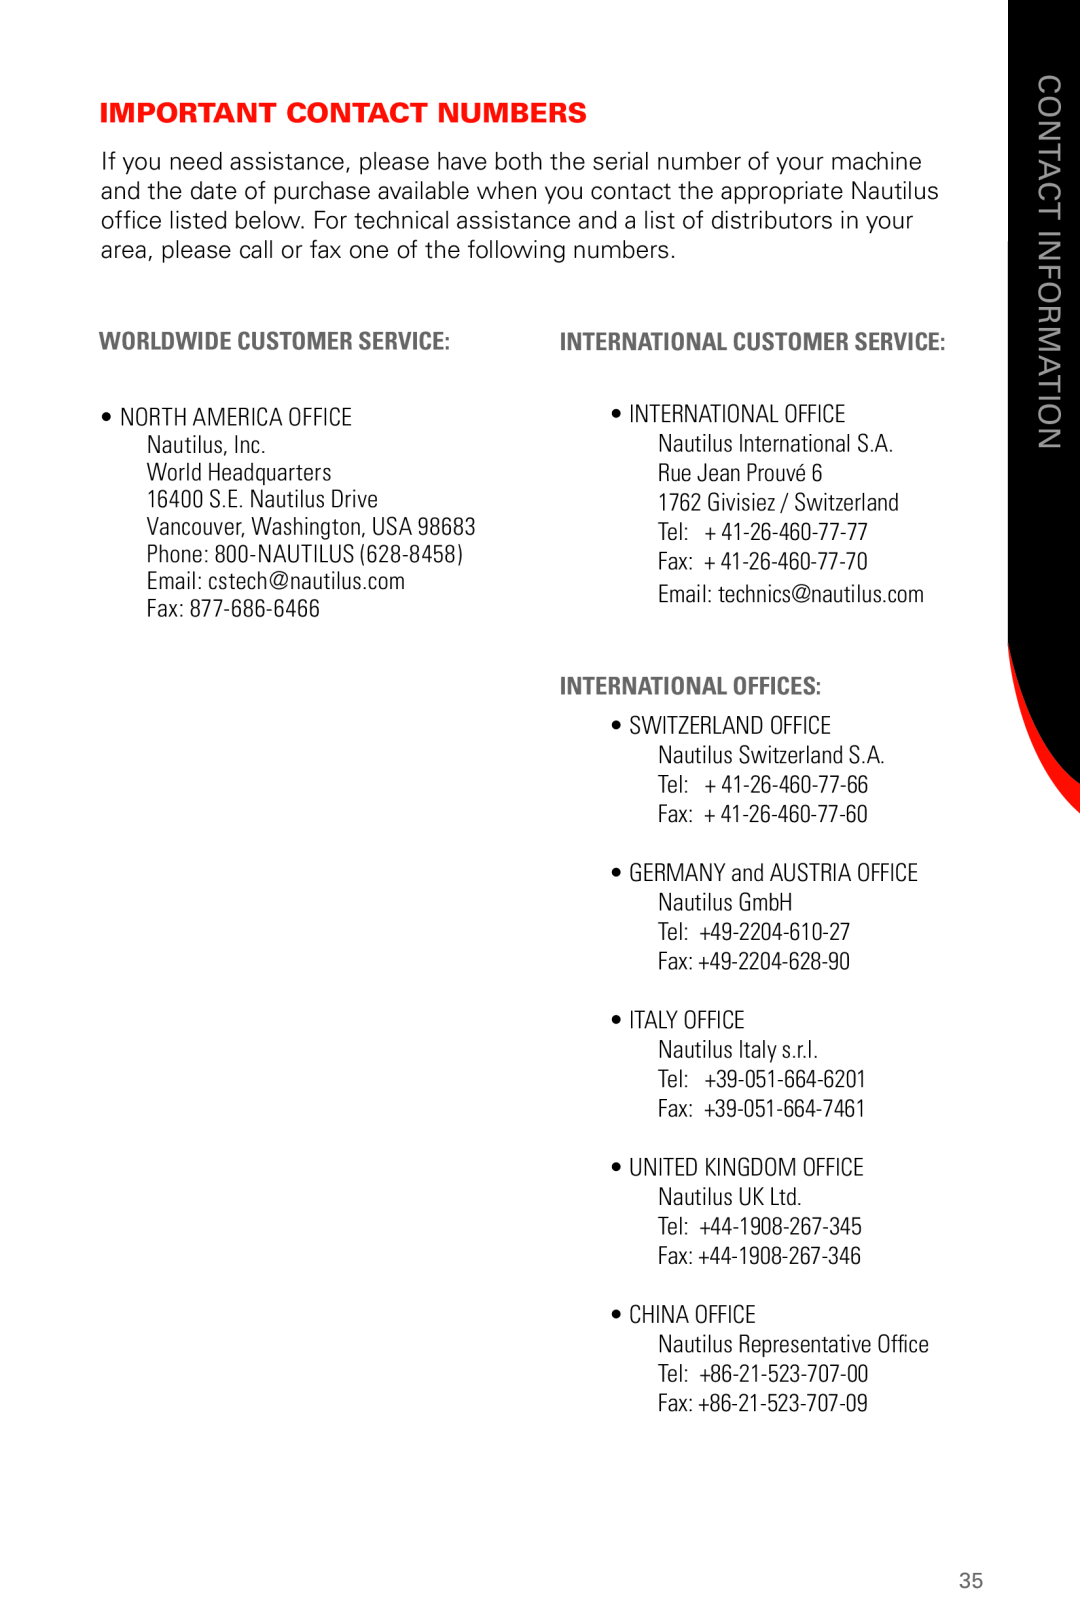 Schwinn 430 manual Information, Important Contact Numbers, Worldwide Customer Service, International Customer Service 